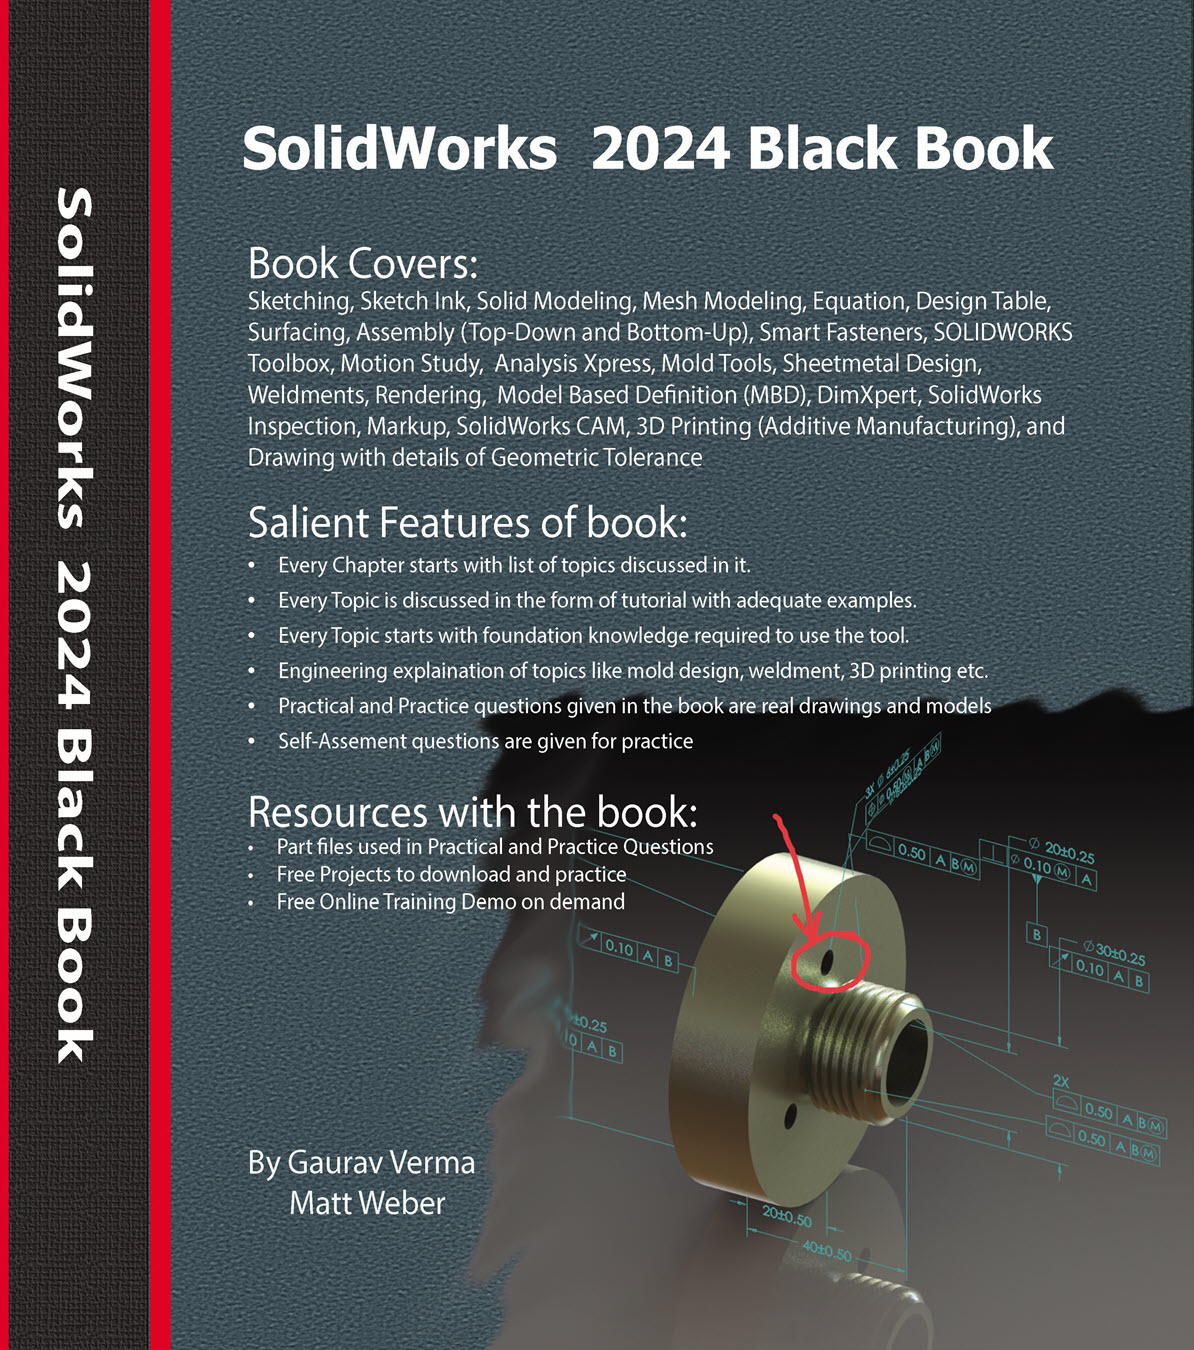 SolidWorks 2024 Black Book Cover